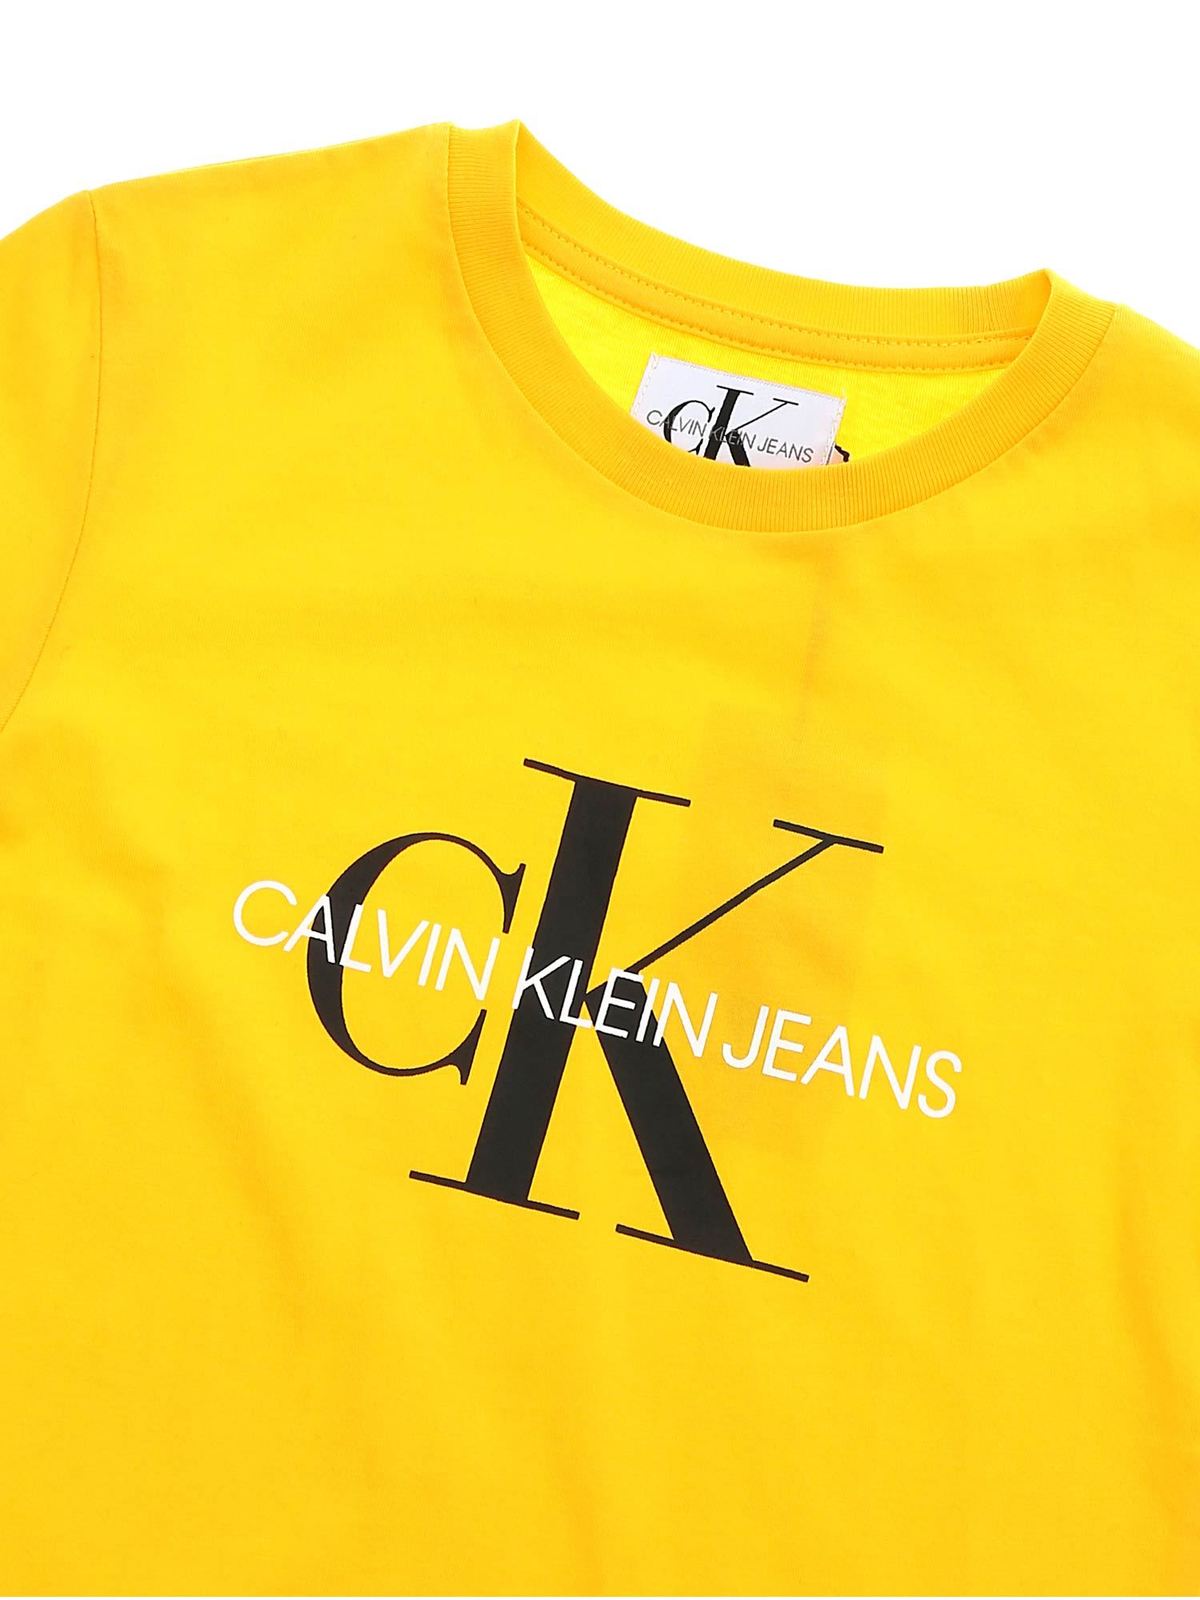 calvin klein yellow shirt